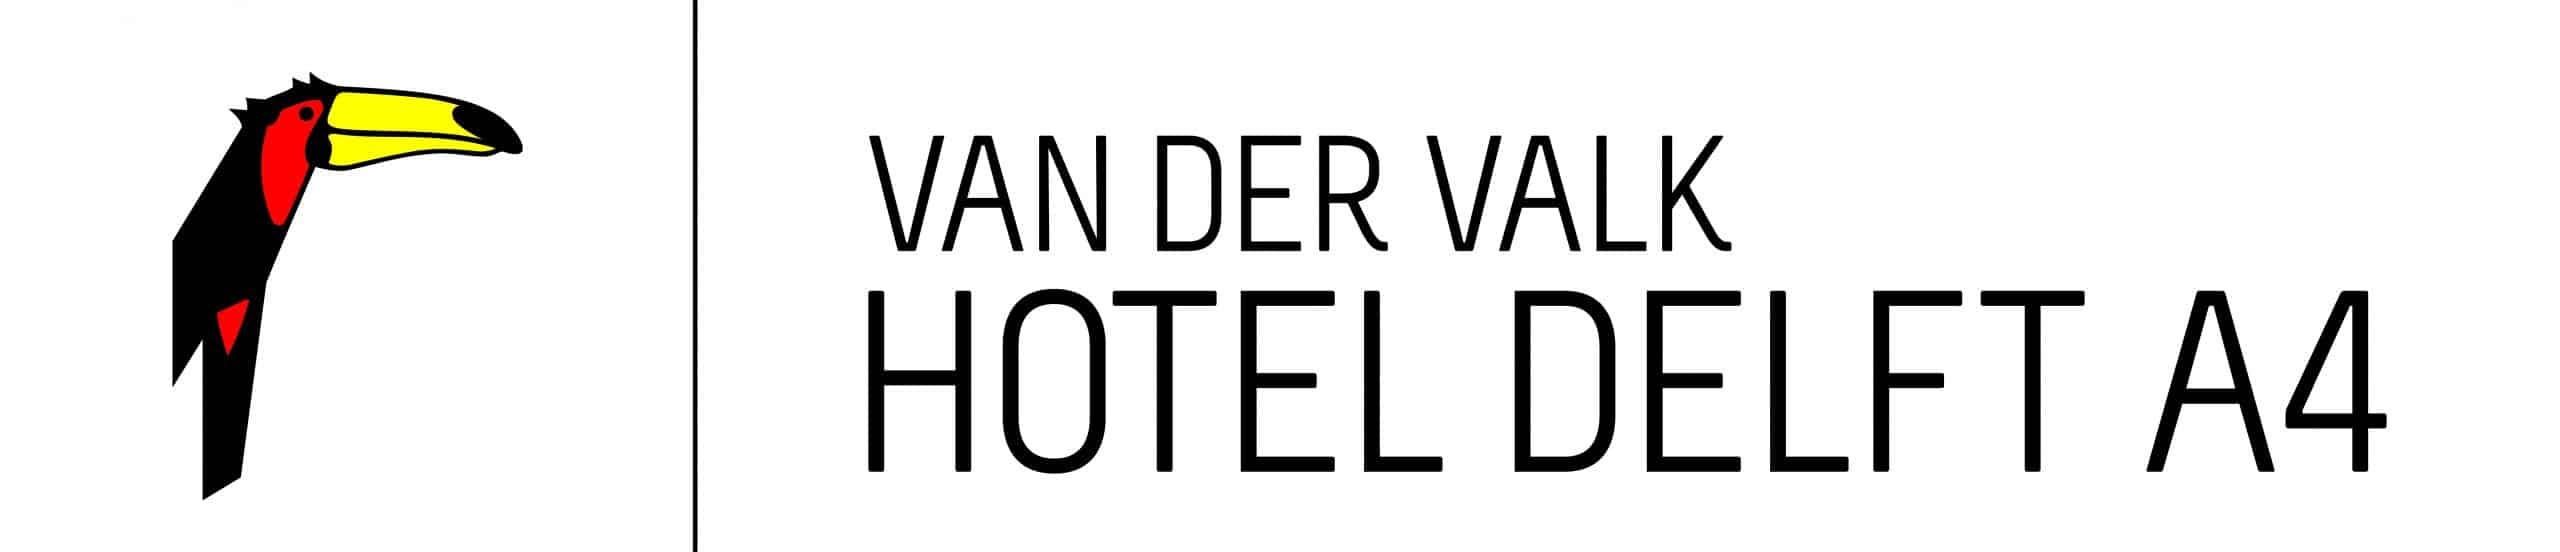 Logo van der Valk Hotel delft A4 - Midden-Delfland